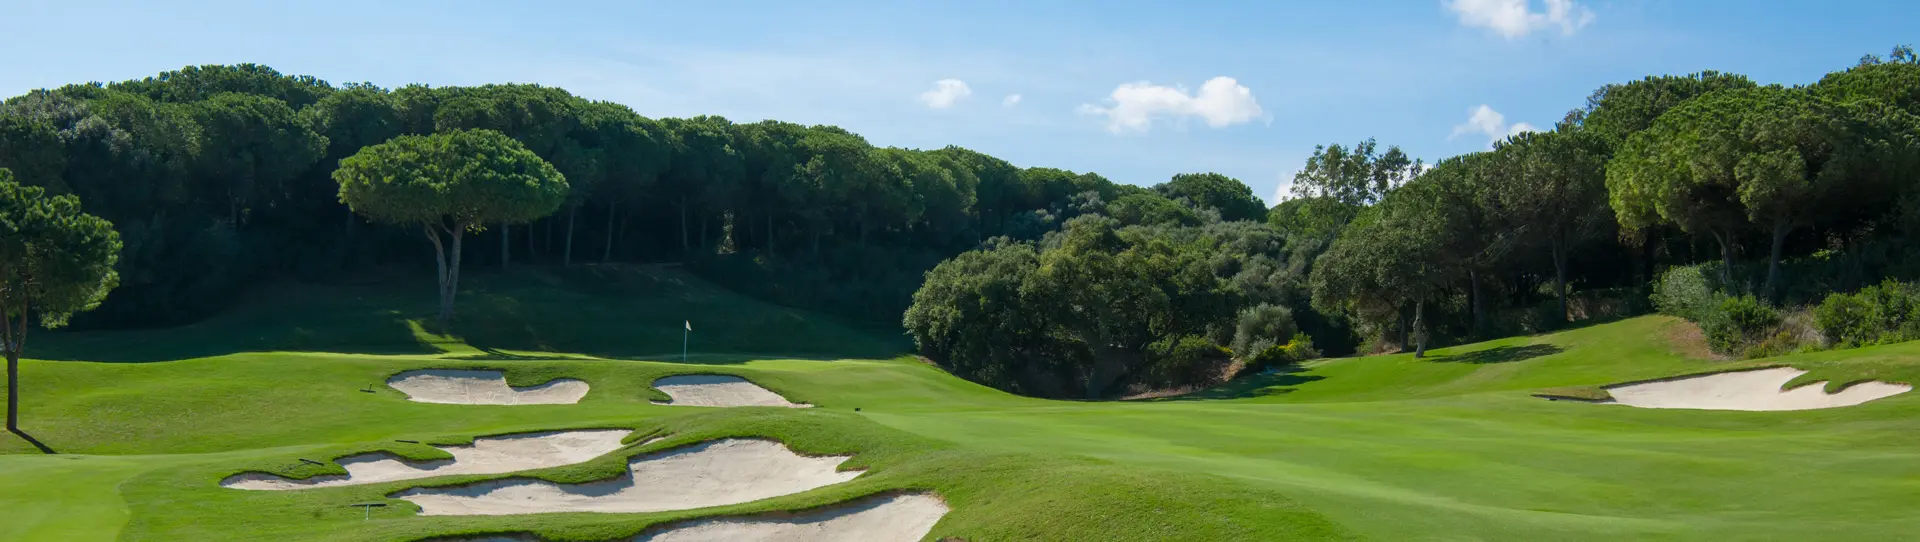 Spain golf courses - La Reserva at Sotogrande - Photo 1